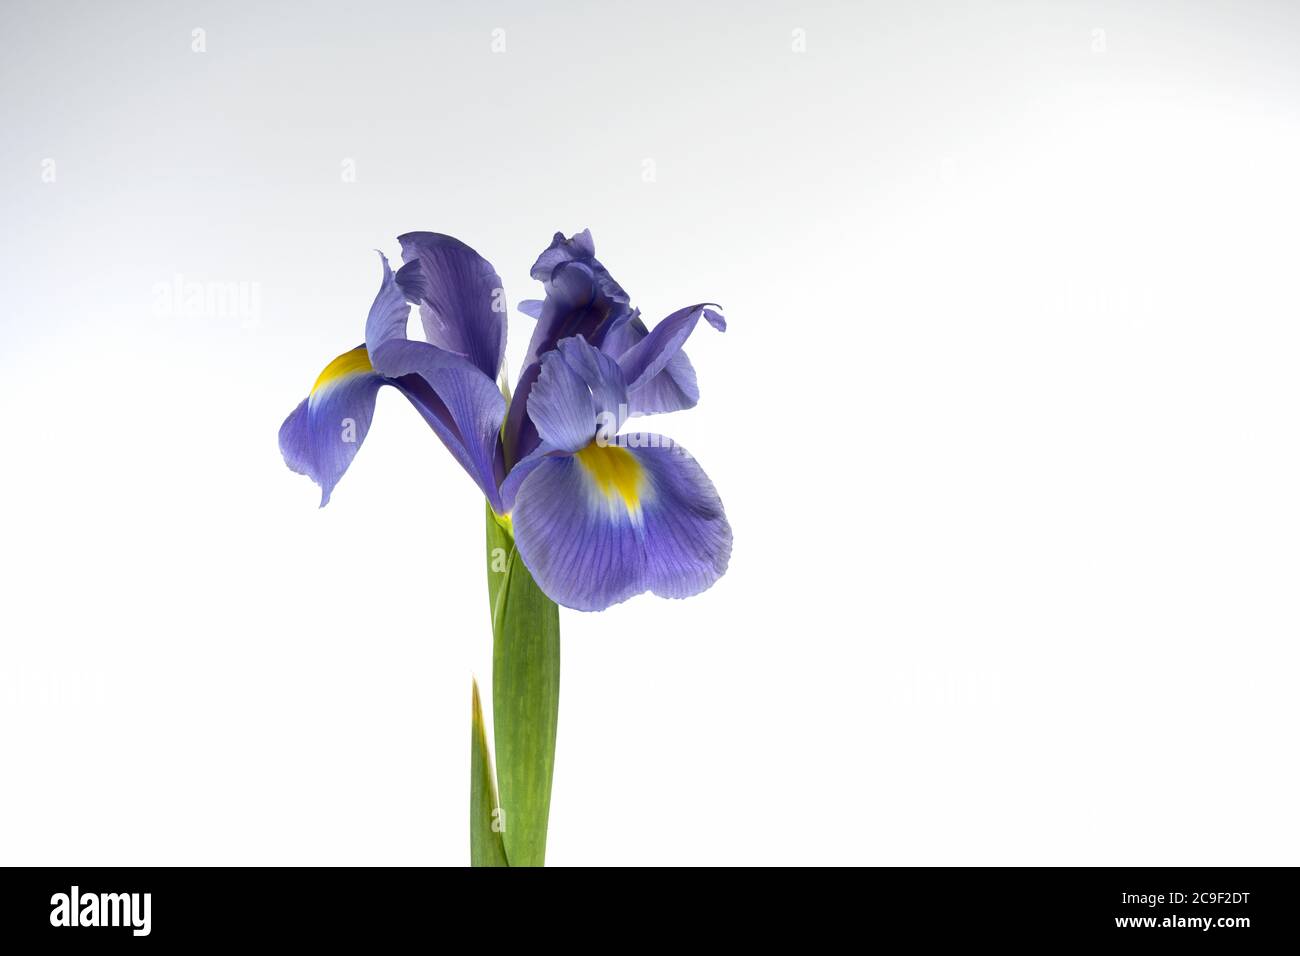 Viola Iris fotografato su uno sfondo bianco chiaro Foto Stock